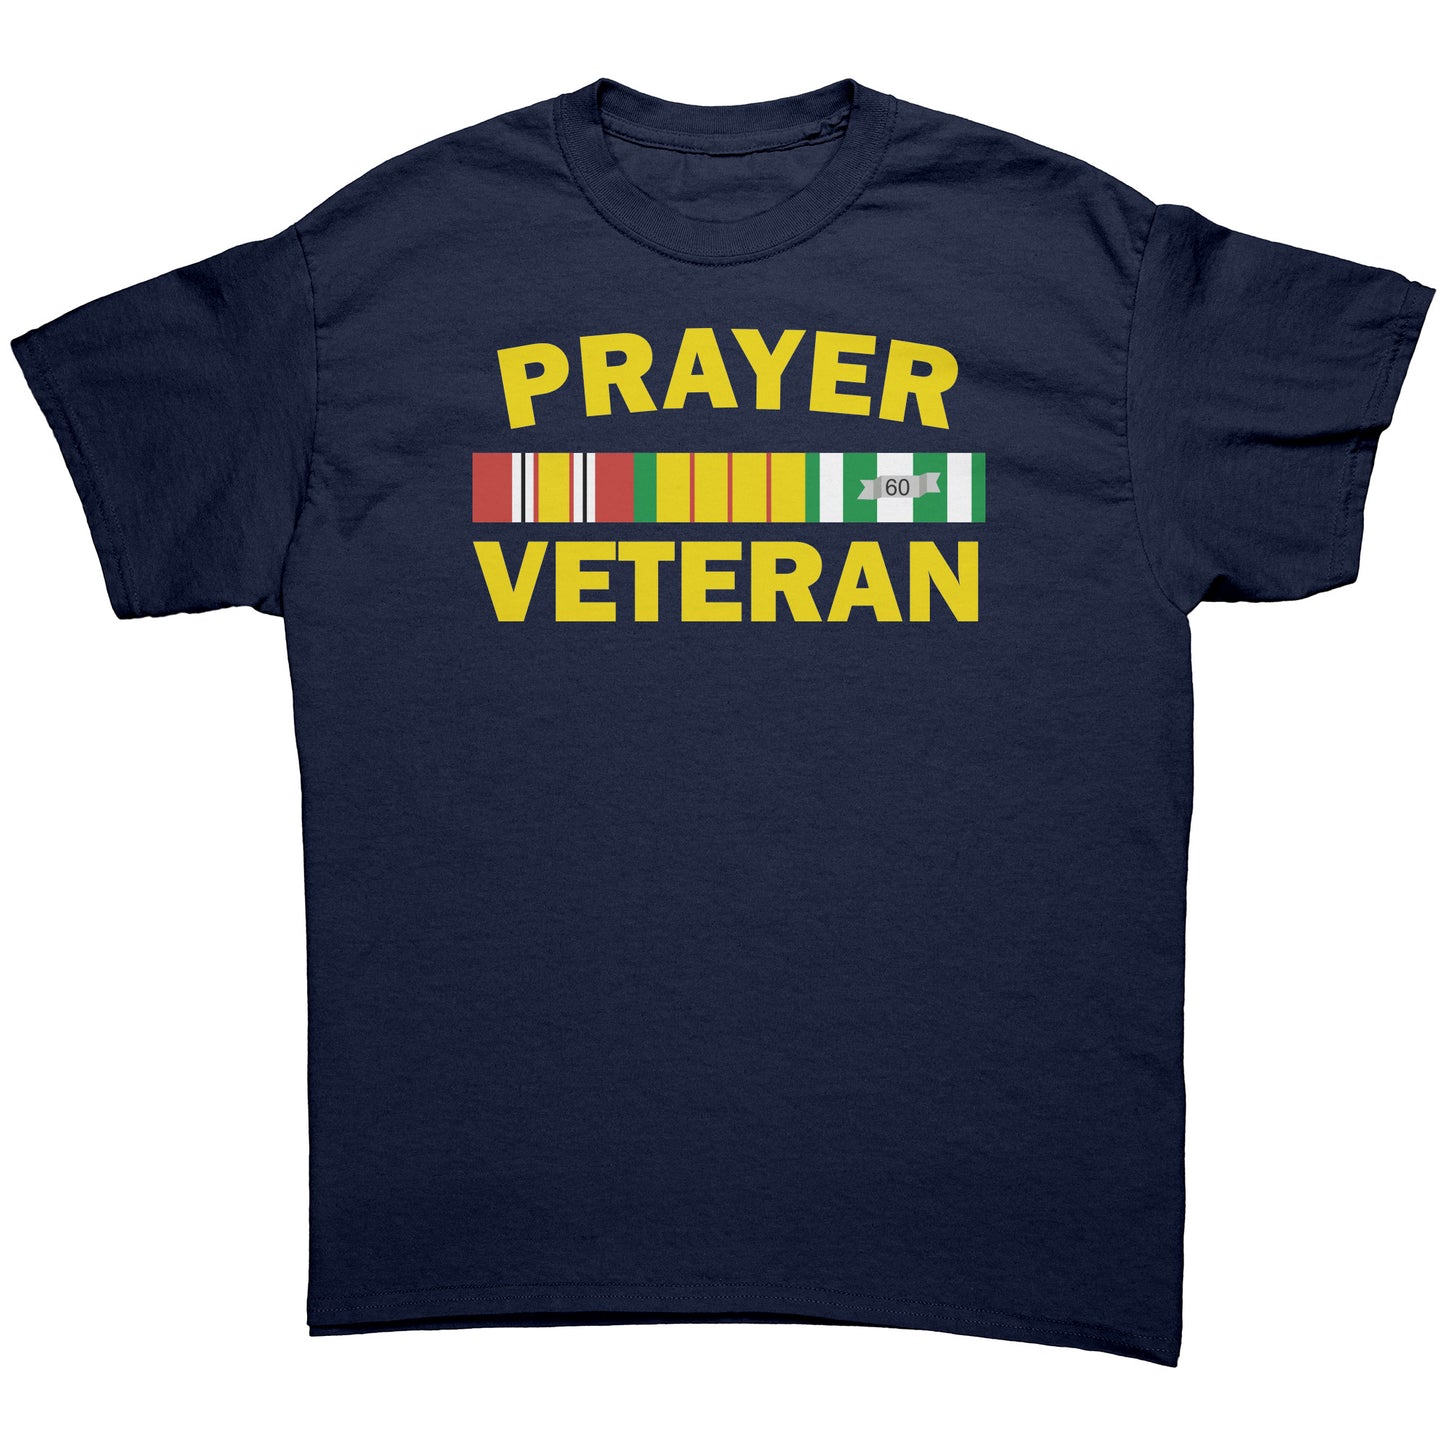 Prayer Veteran Men's T-Shirt